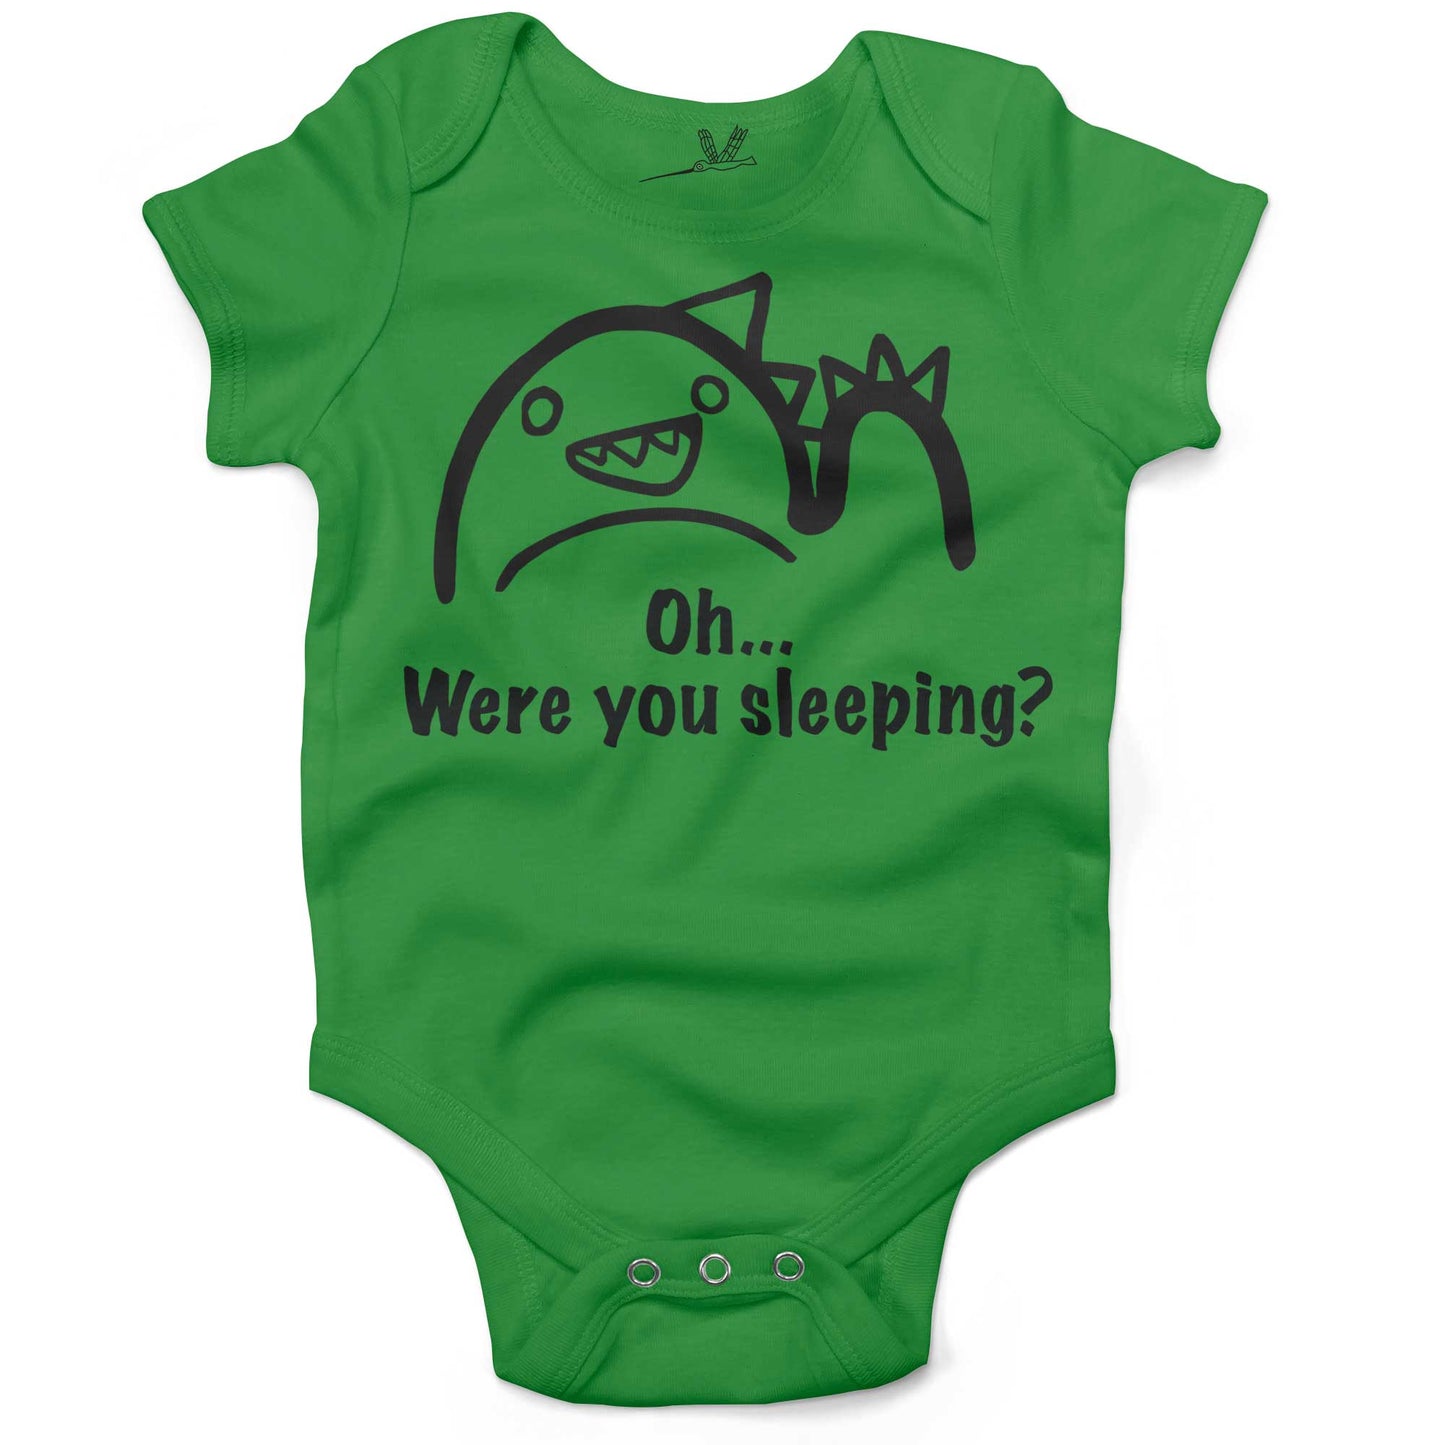 Oh...Were you sleeping? Infant Bodysuit or Raglan Baby Tee-Grass Green-3-6 months